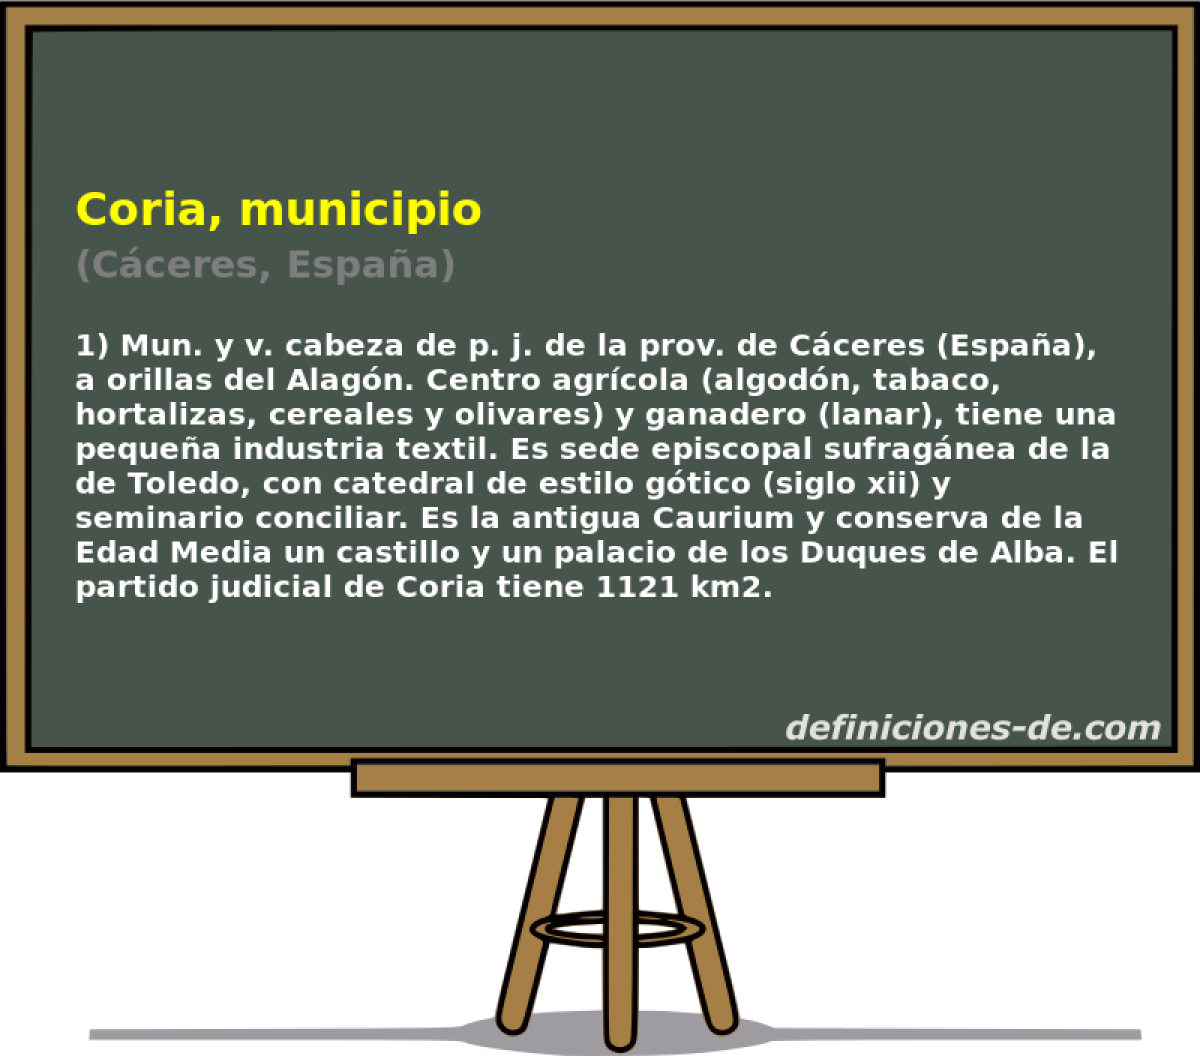 Coria, municipio (Cceres, Espaa)